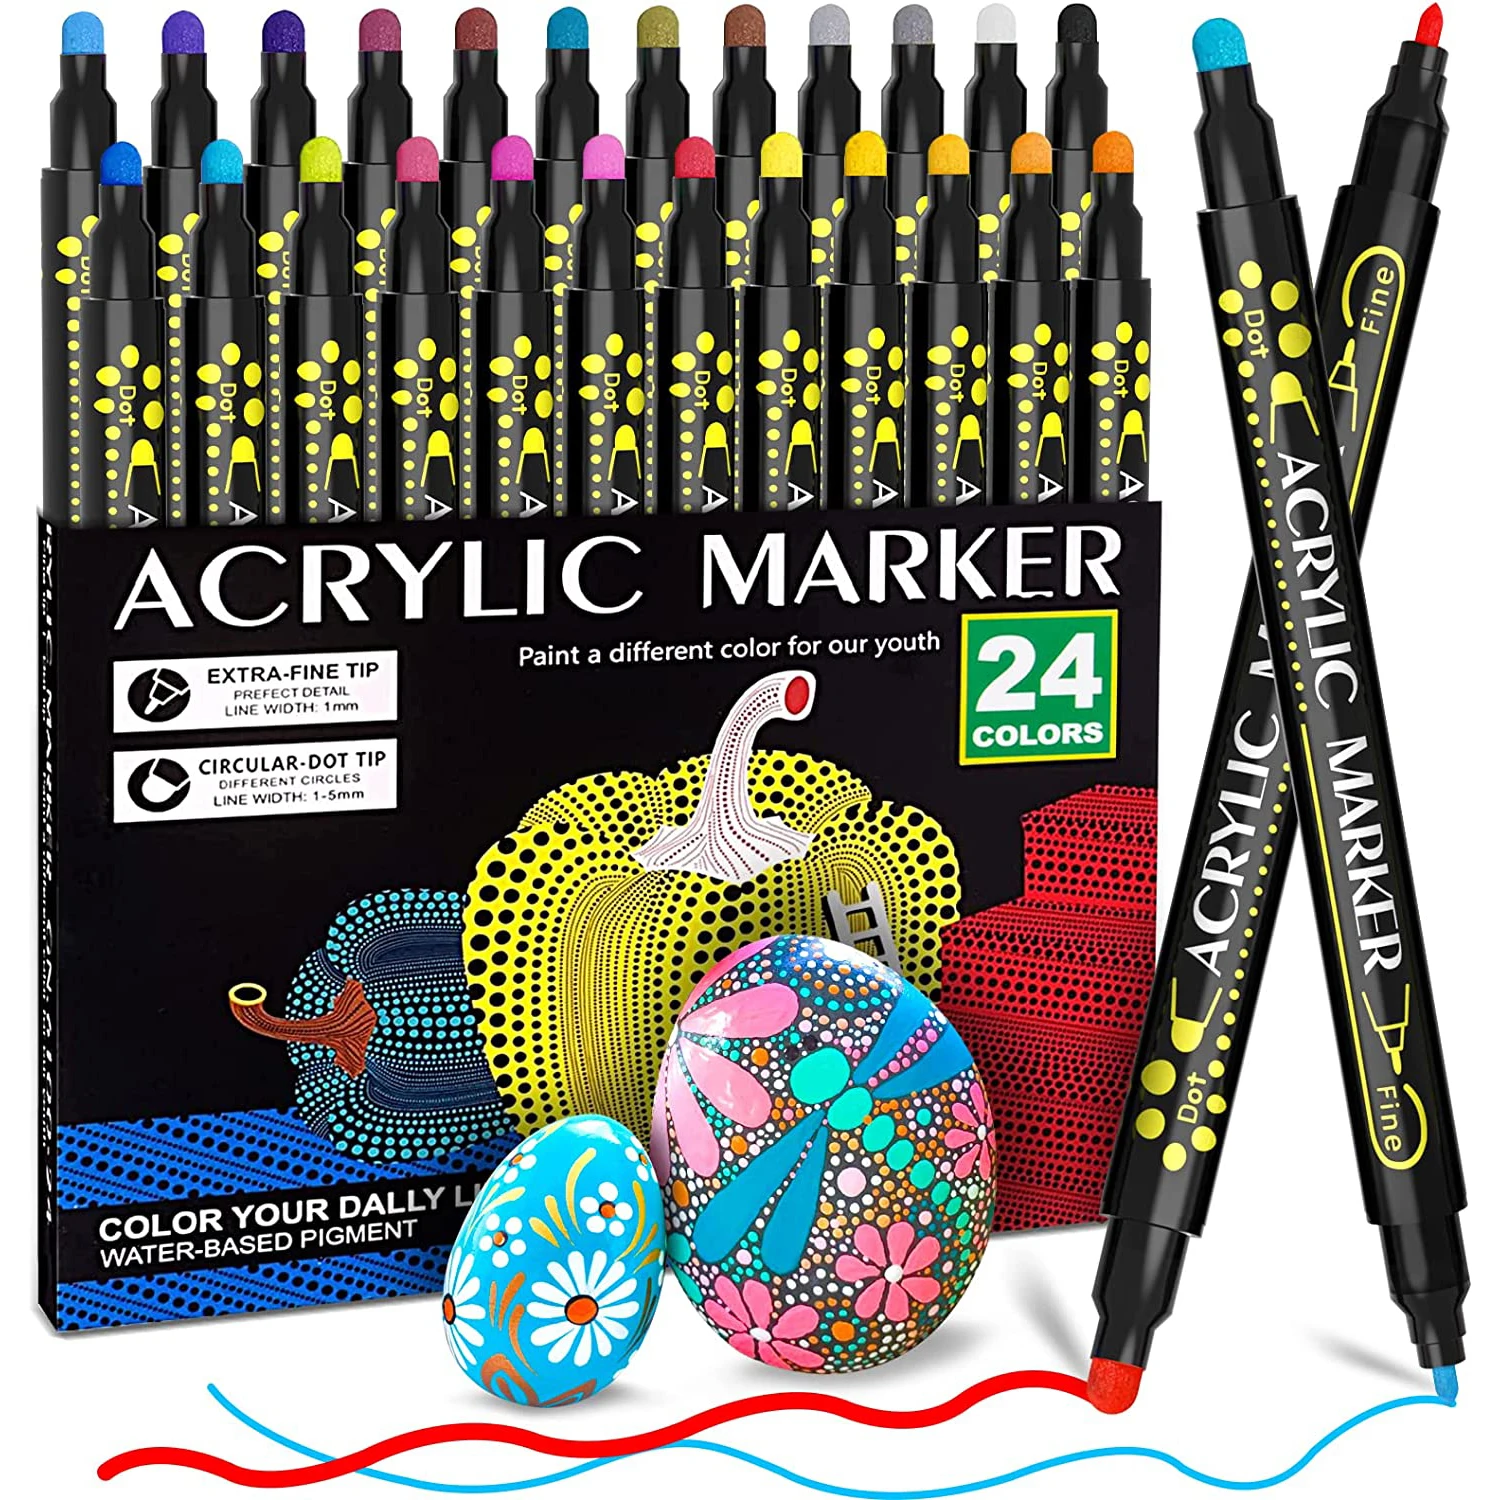 https://ae01.alicdn.com/kf/S11bab6acd10745bf995da71ad49ffc55q/Dual-Tip-Acrylic-Paint-Pens-12-24-36-Colors-Paint-Pens-With-Circular-Dot-Tip-Extra.jpg